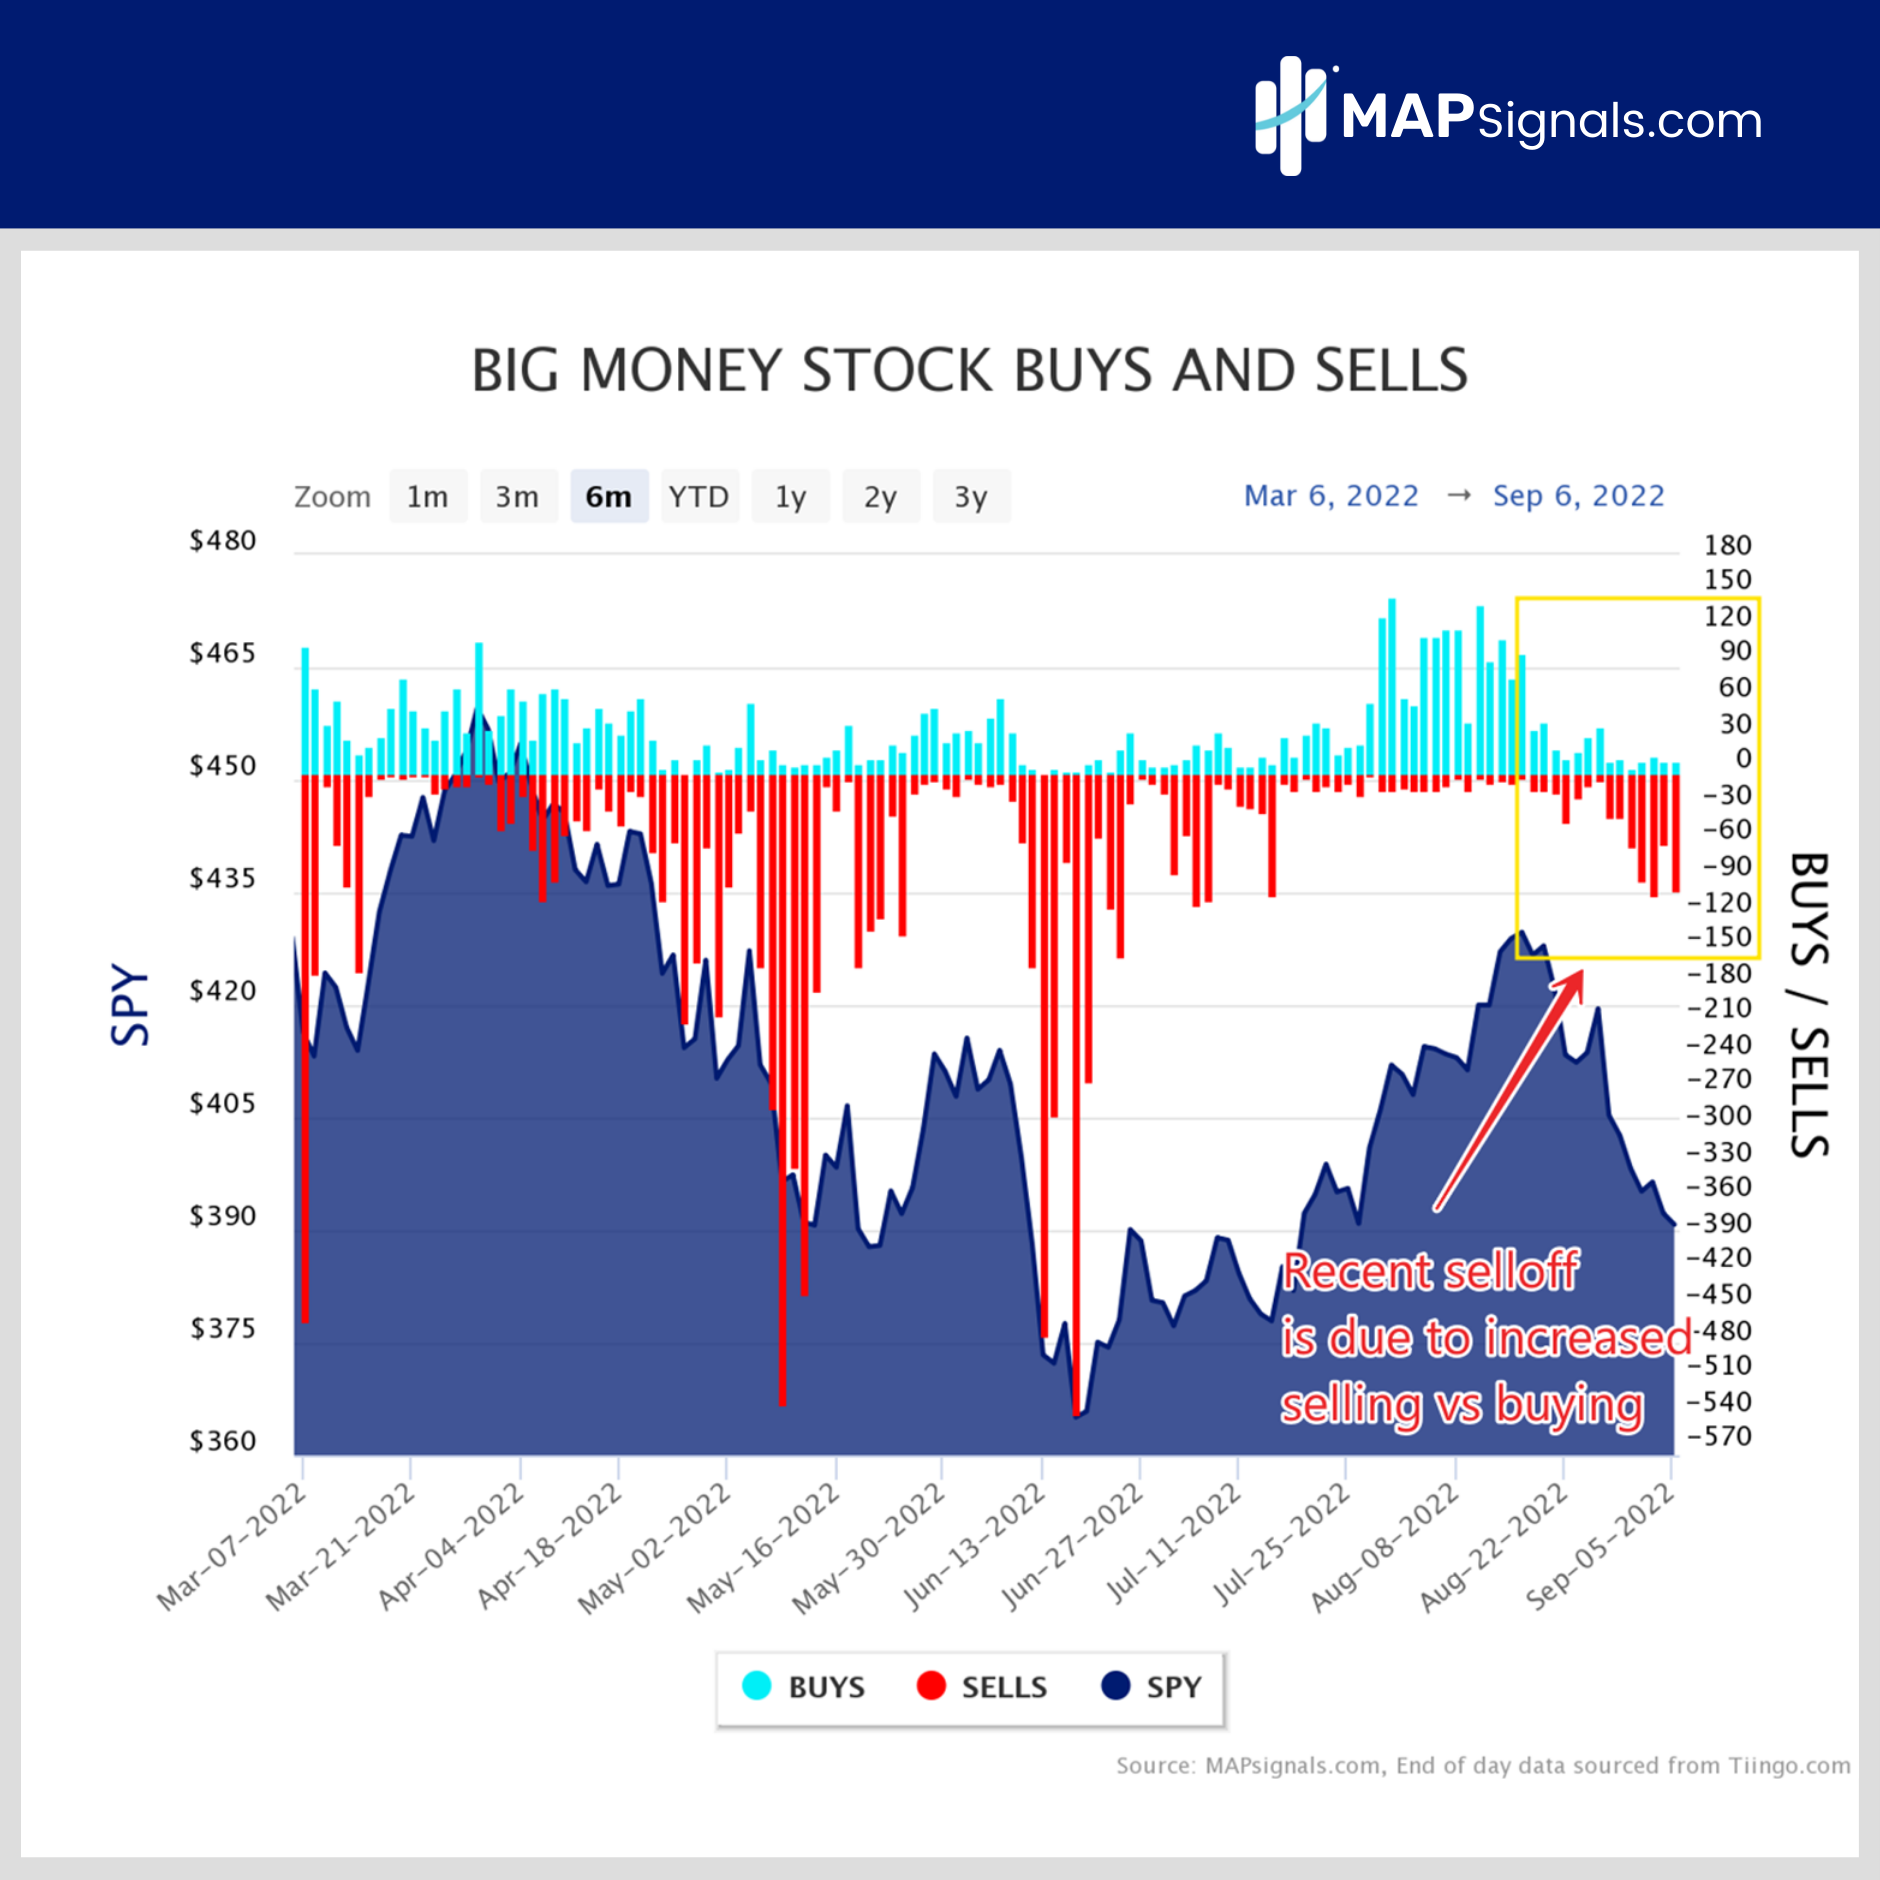 Recent selloff - Big Money stock buys and sells